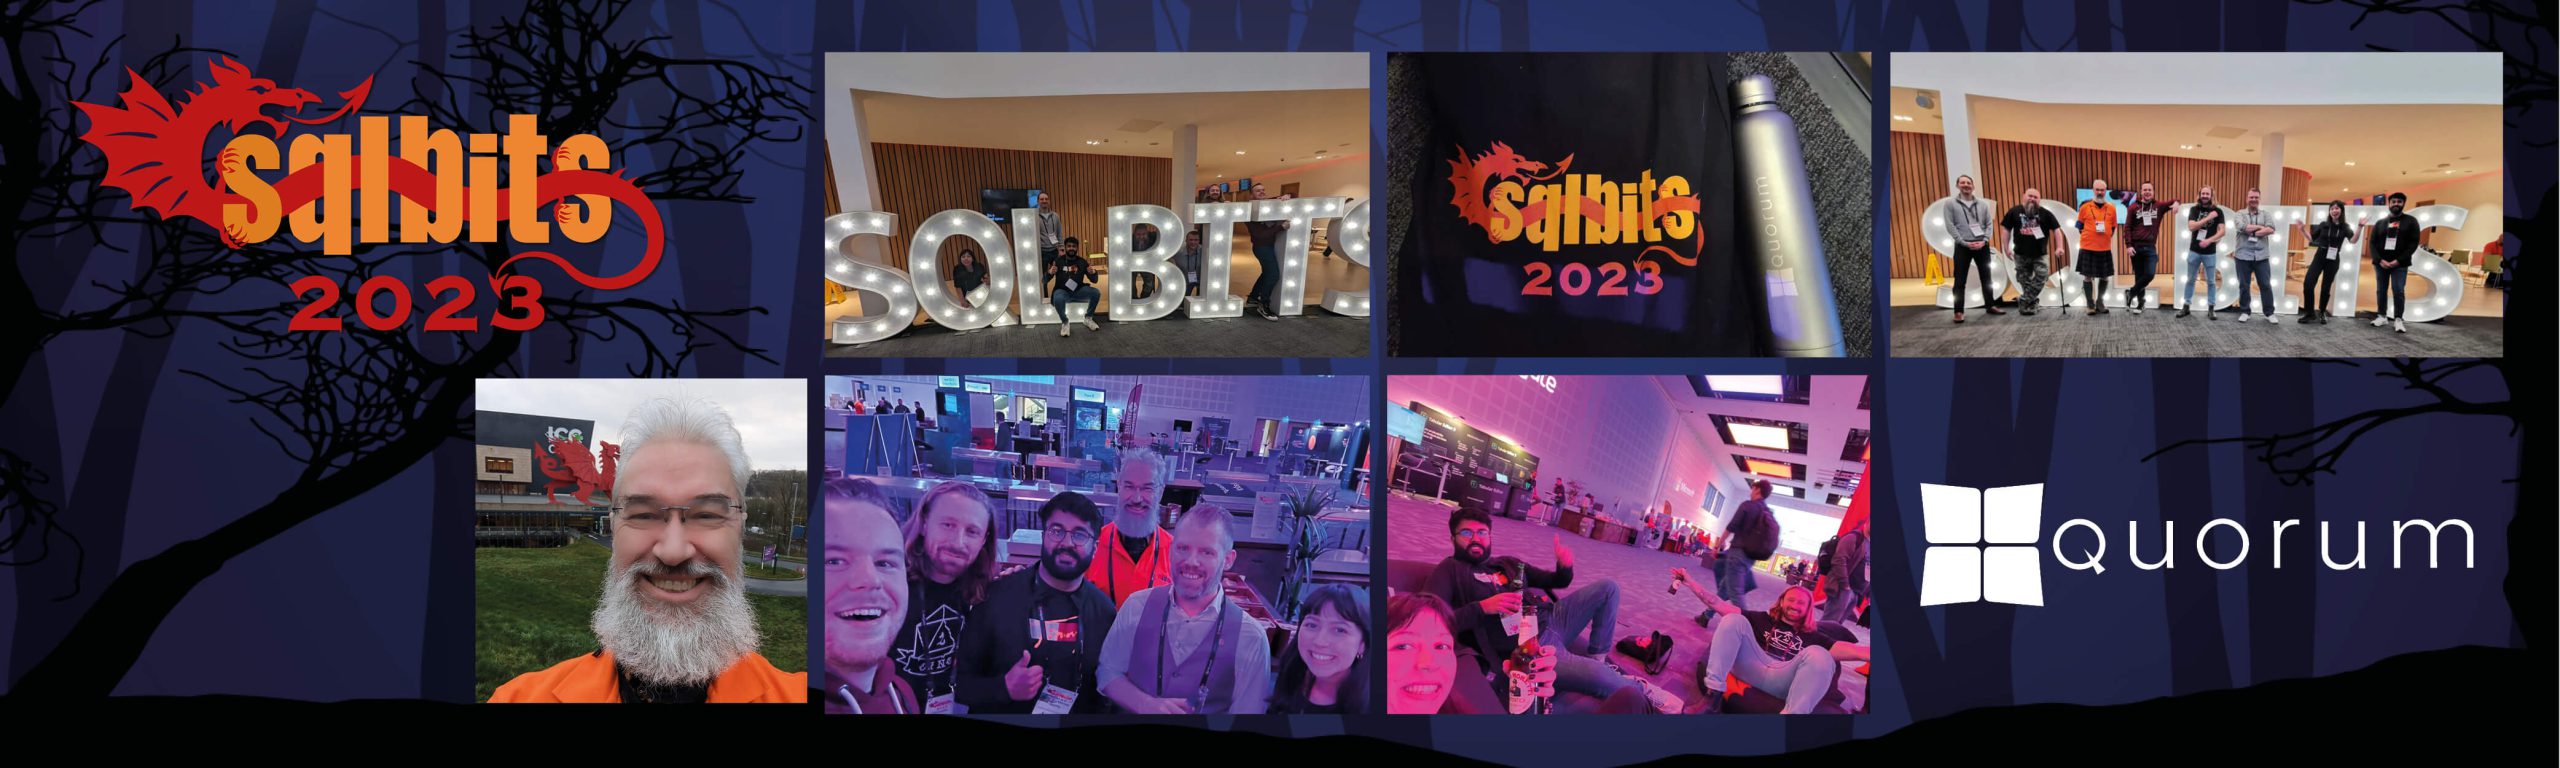 SQLBits 2023 Roundup Header Banner